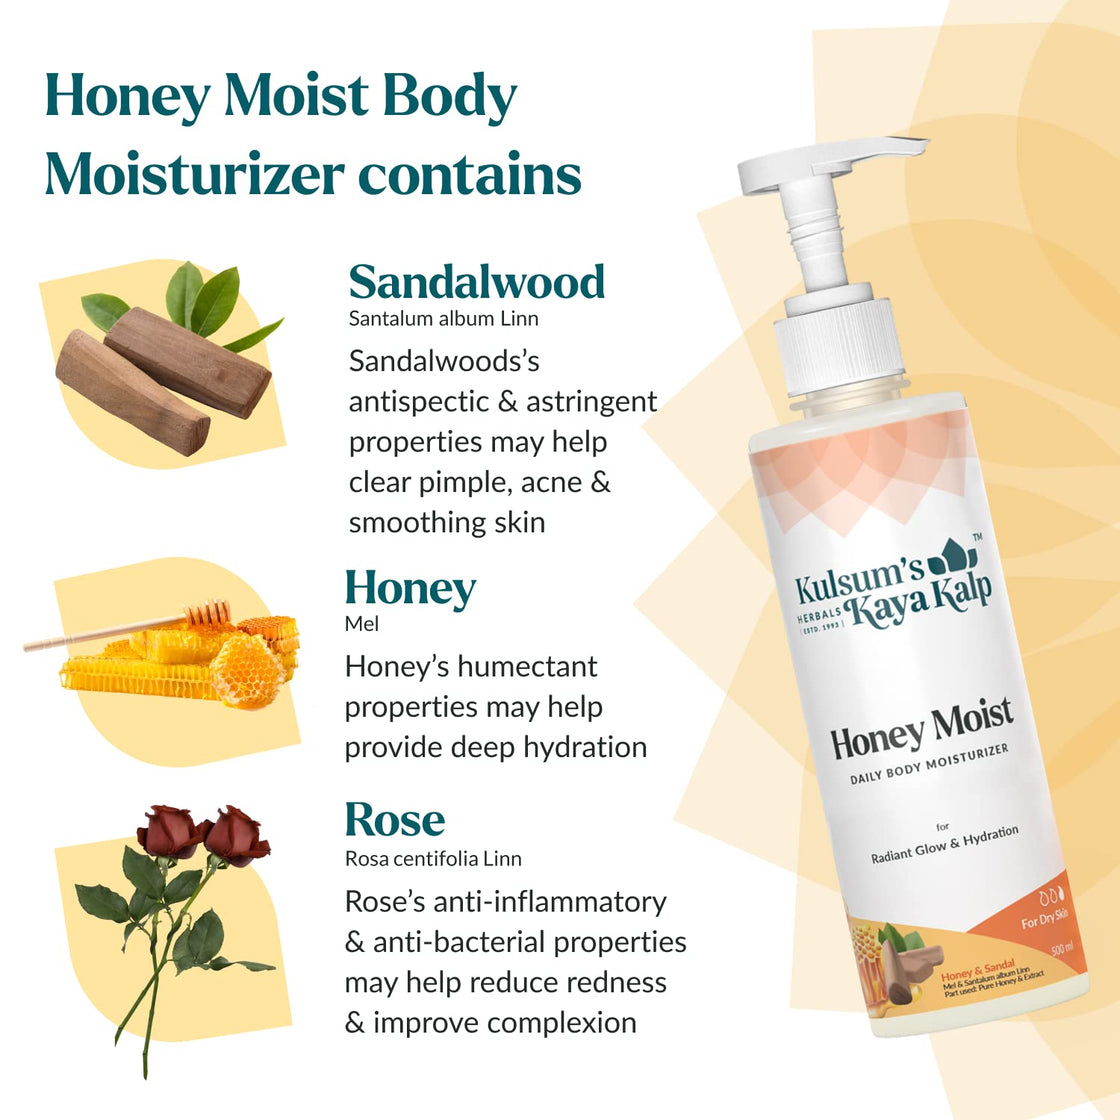 Kulsum's kayakalp Honey Moist Daily Body Moisturizer (500ML)